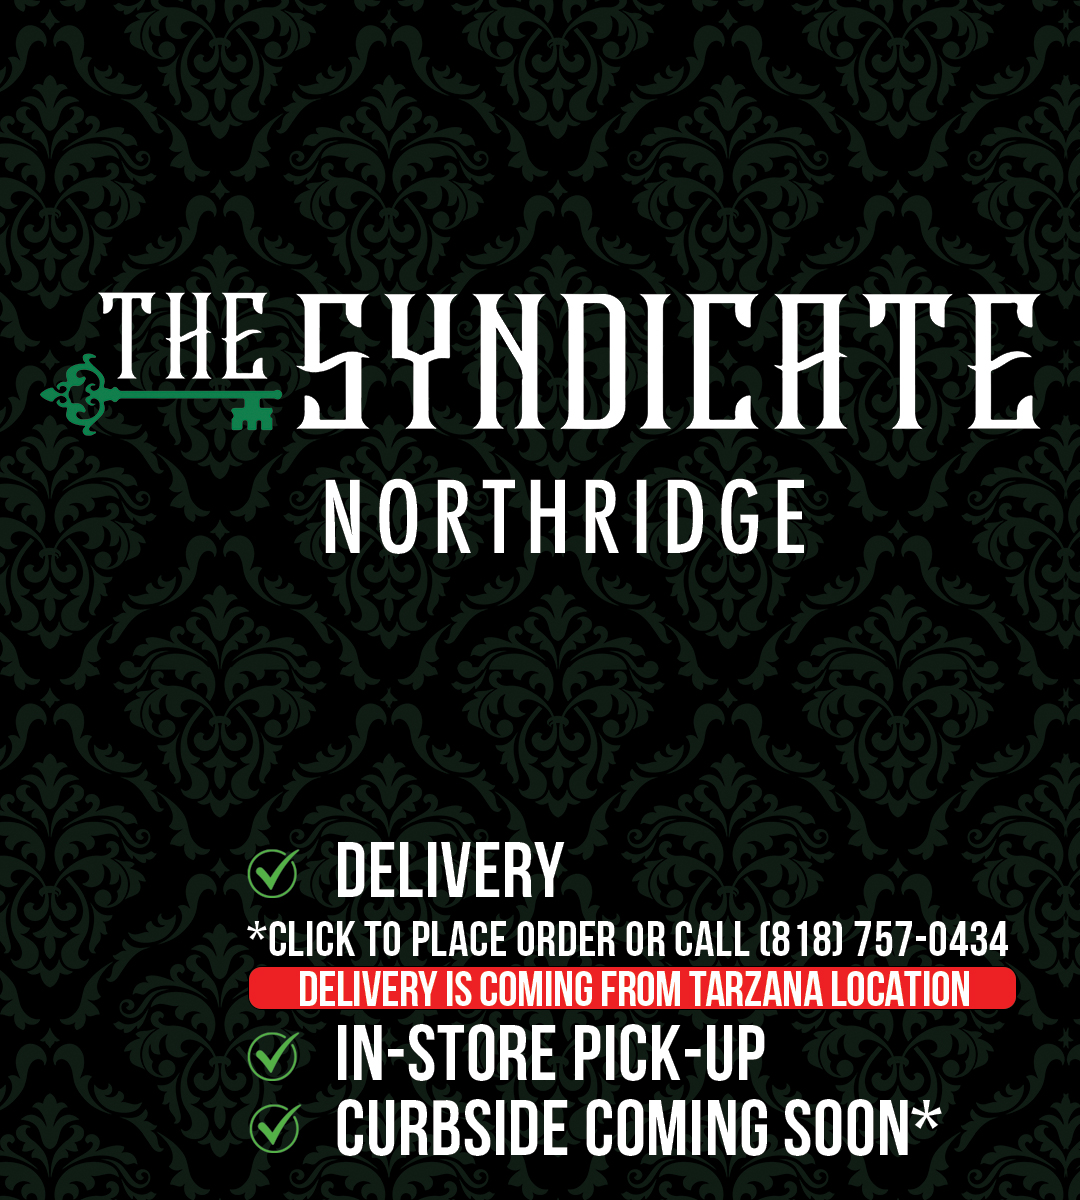 Northridge-Menu-Delivery-Pickup